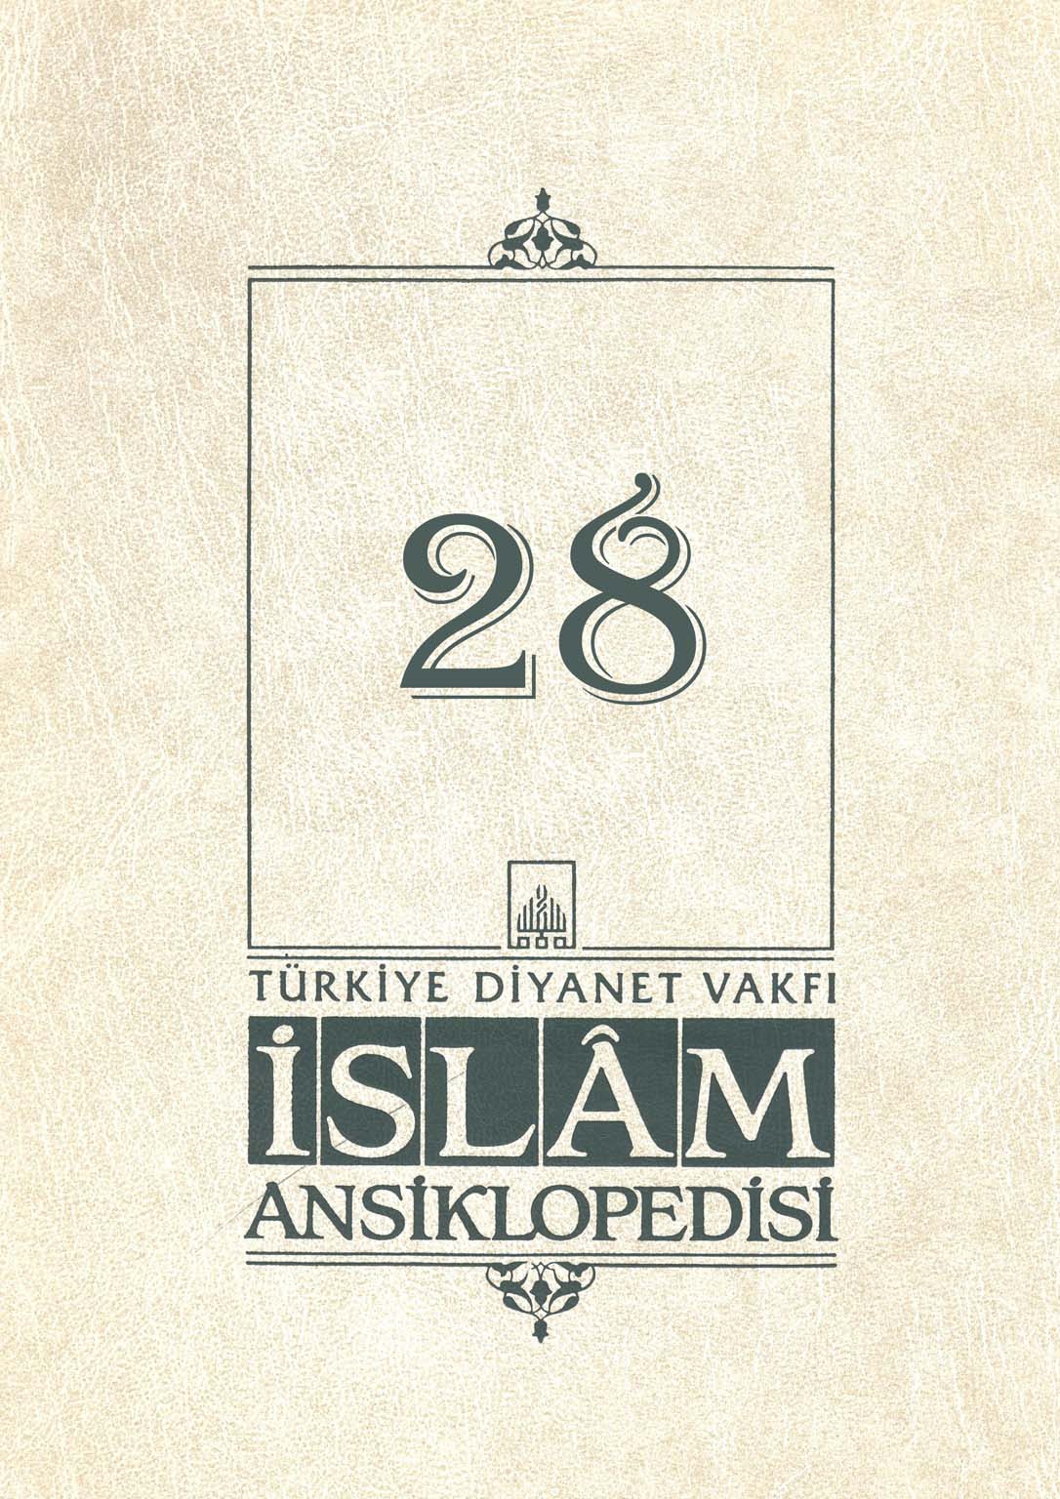 İslam Ansiklopedisi 28. Cilt Manisa Mevlevihanesi Kitap Kapağı